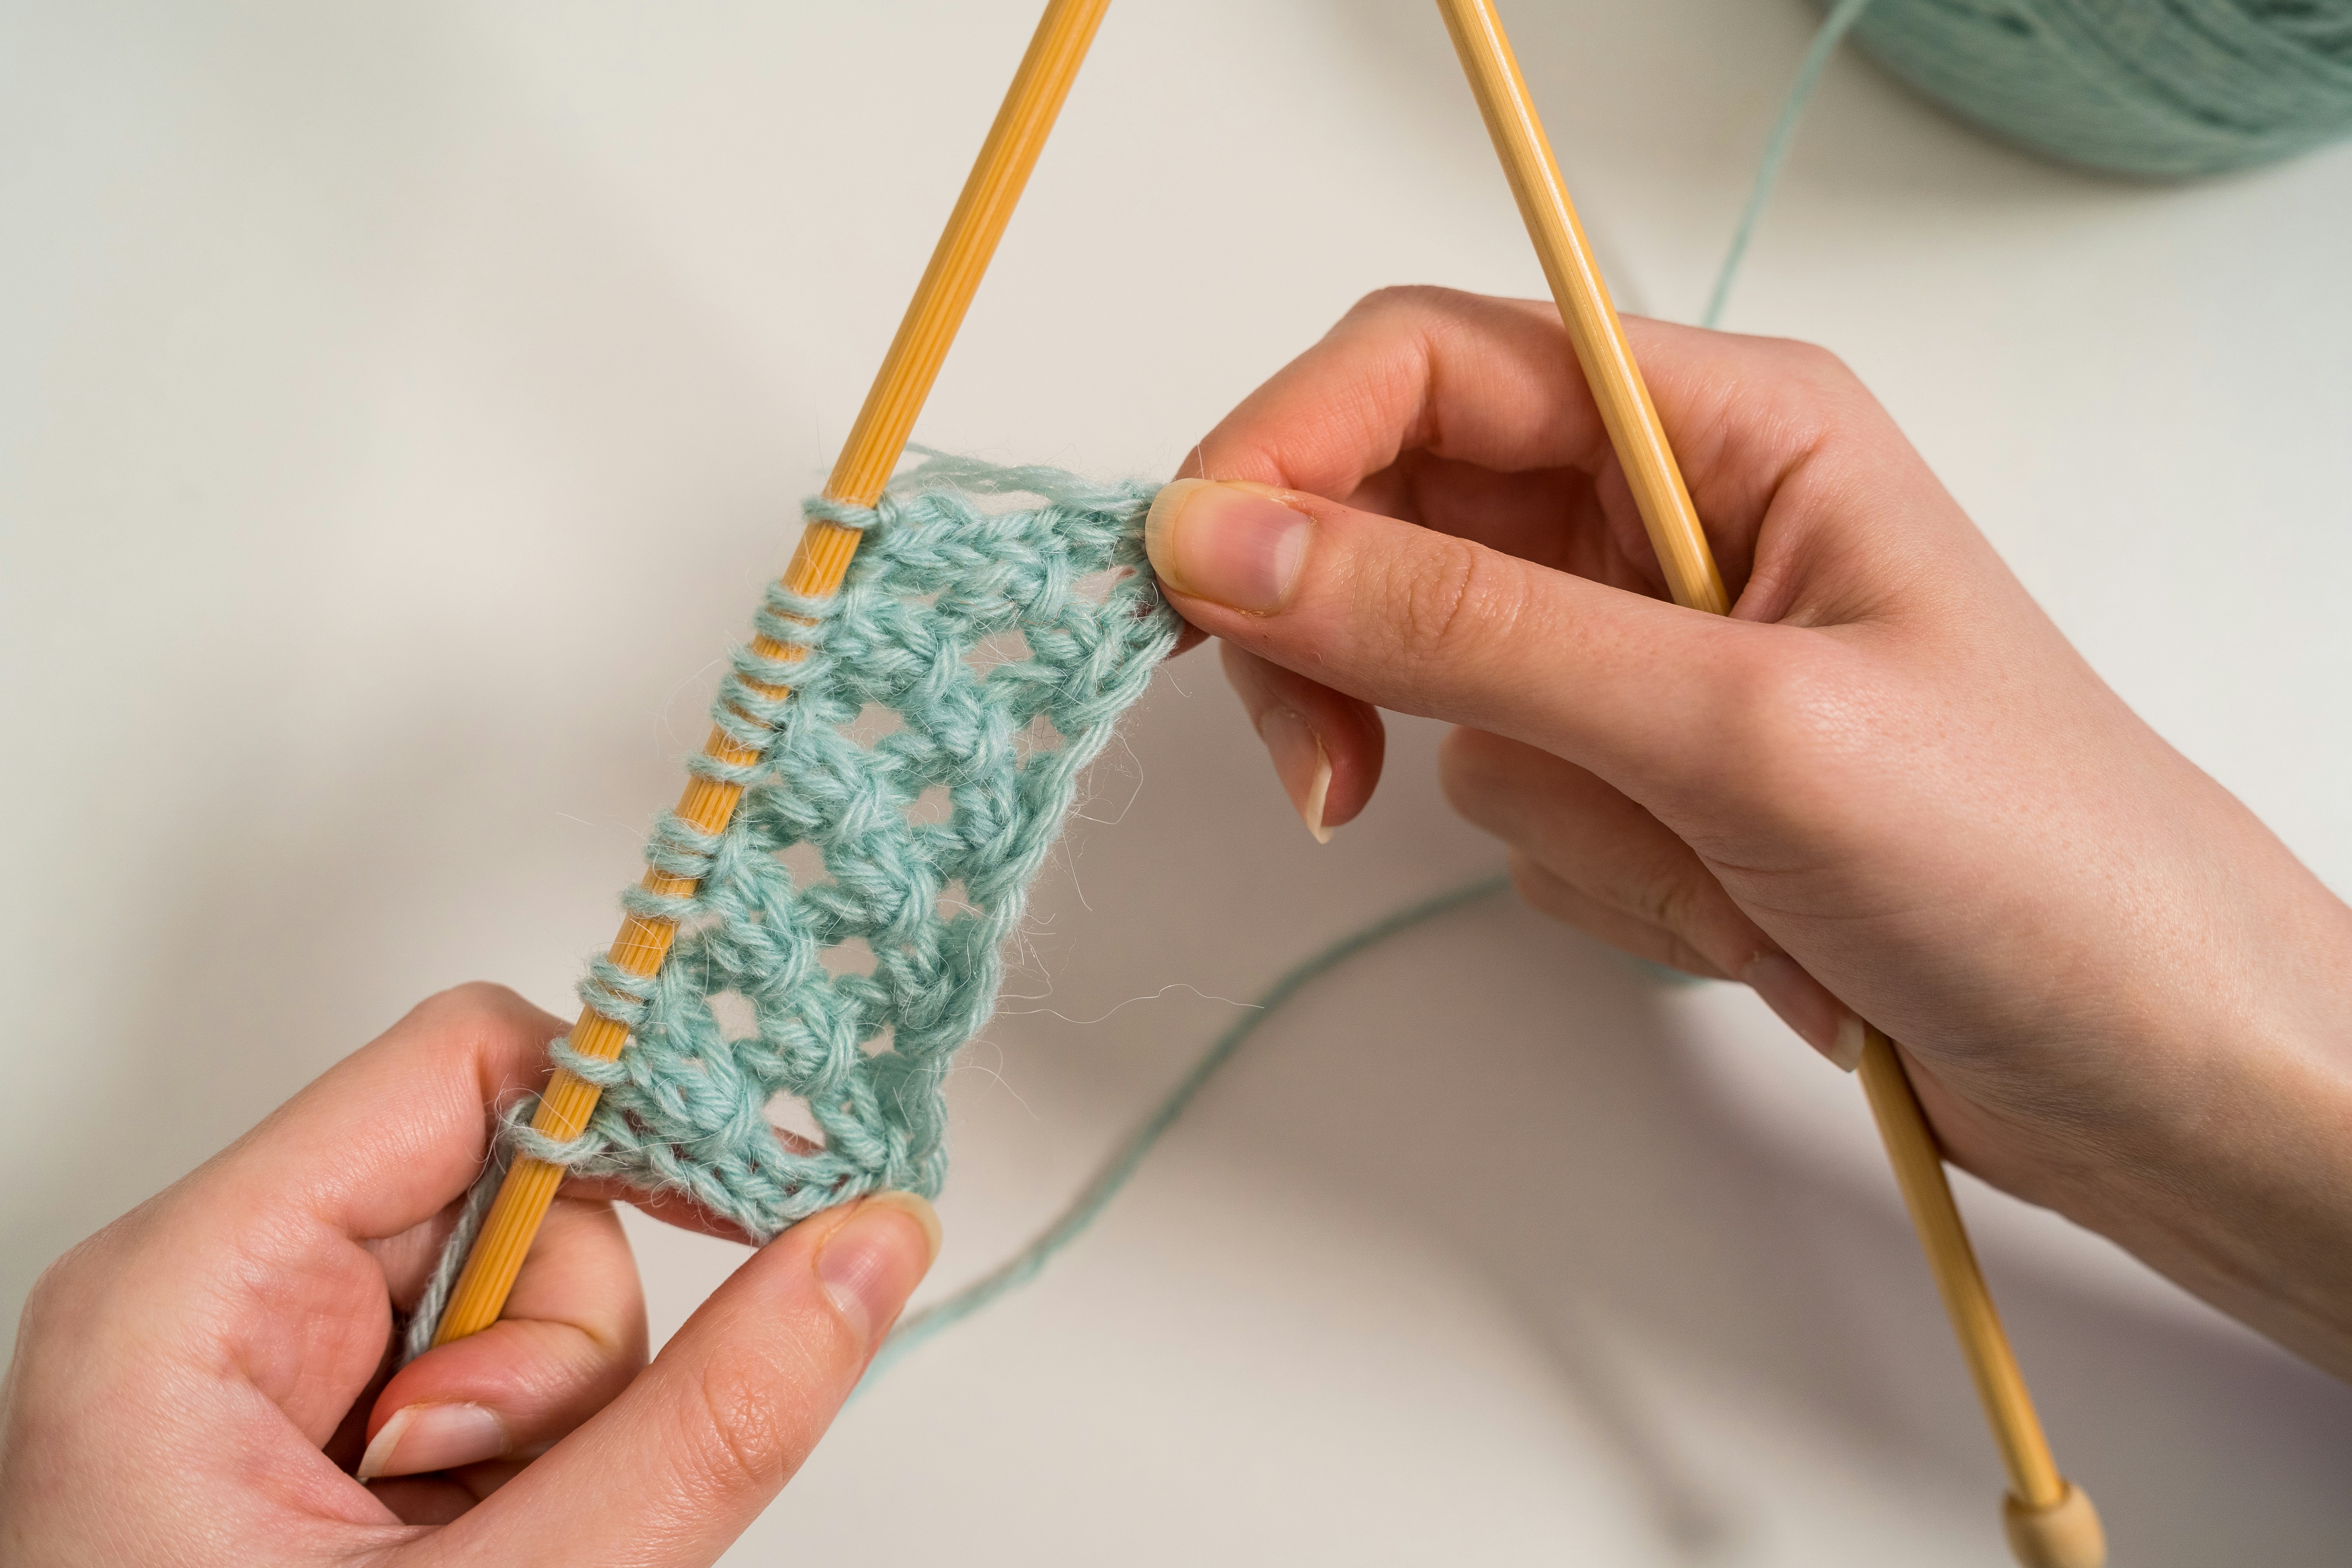  easy knitting gifts <a href='https://www.amazon.com/knitting-humorous-coffee-mug-present/dp/B081VGH8ZZ/?tag=satusatu4-20'>knitters coffee mug</a> knitting accessories gifts 